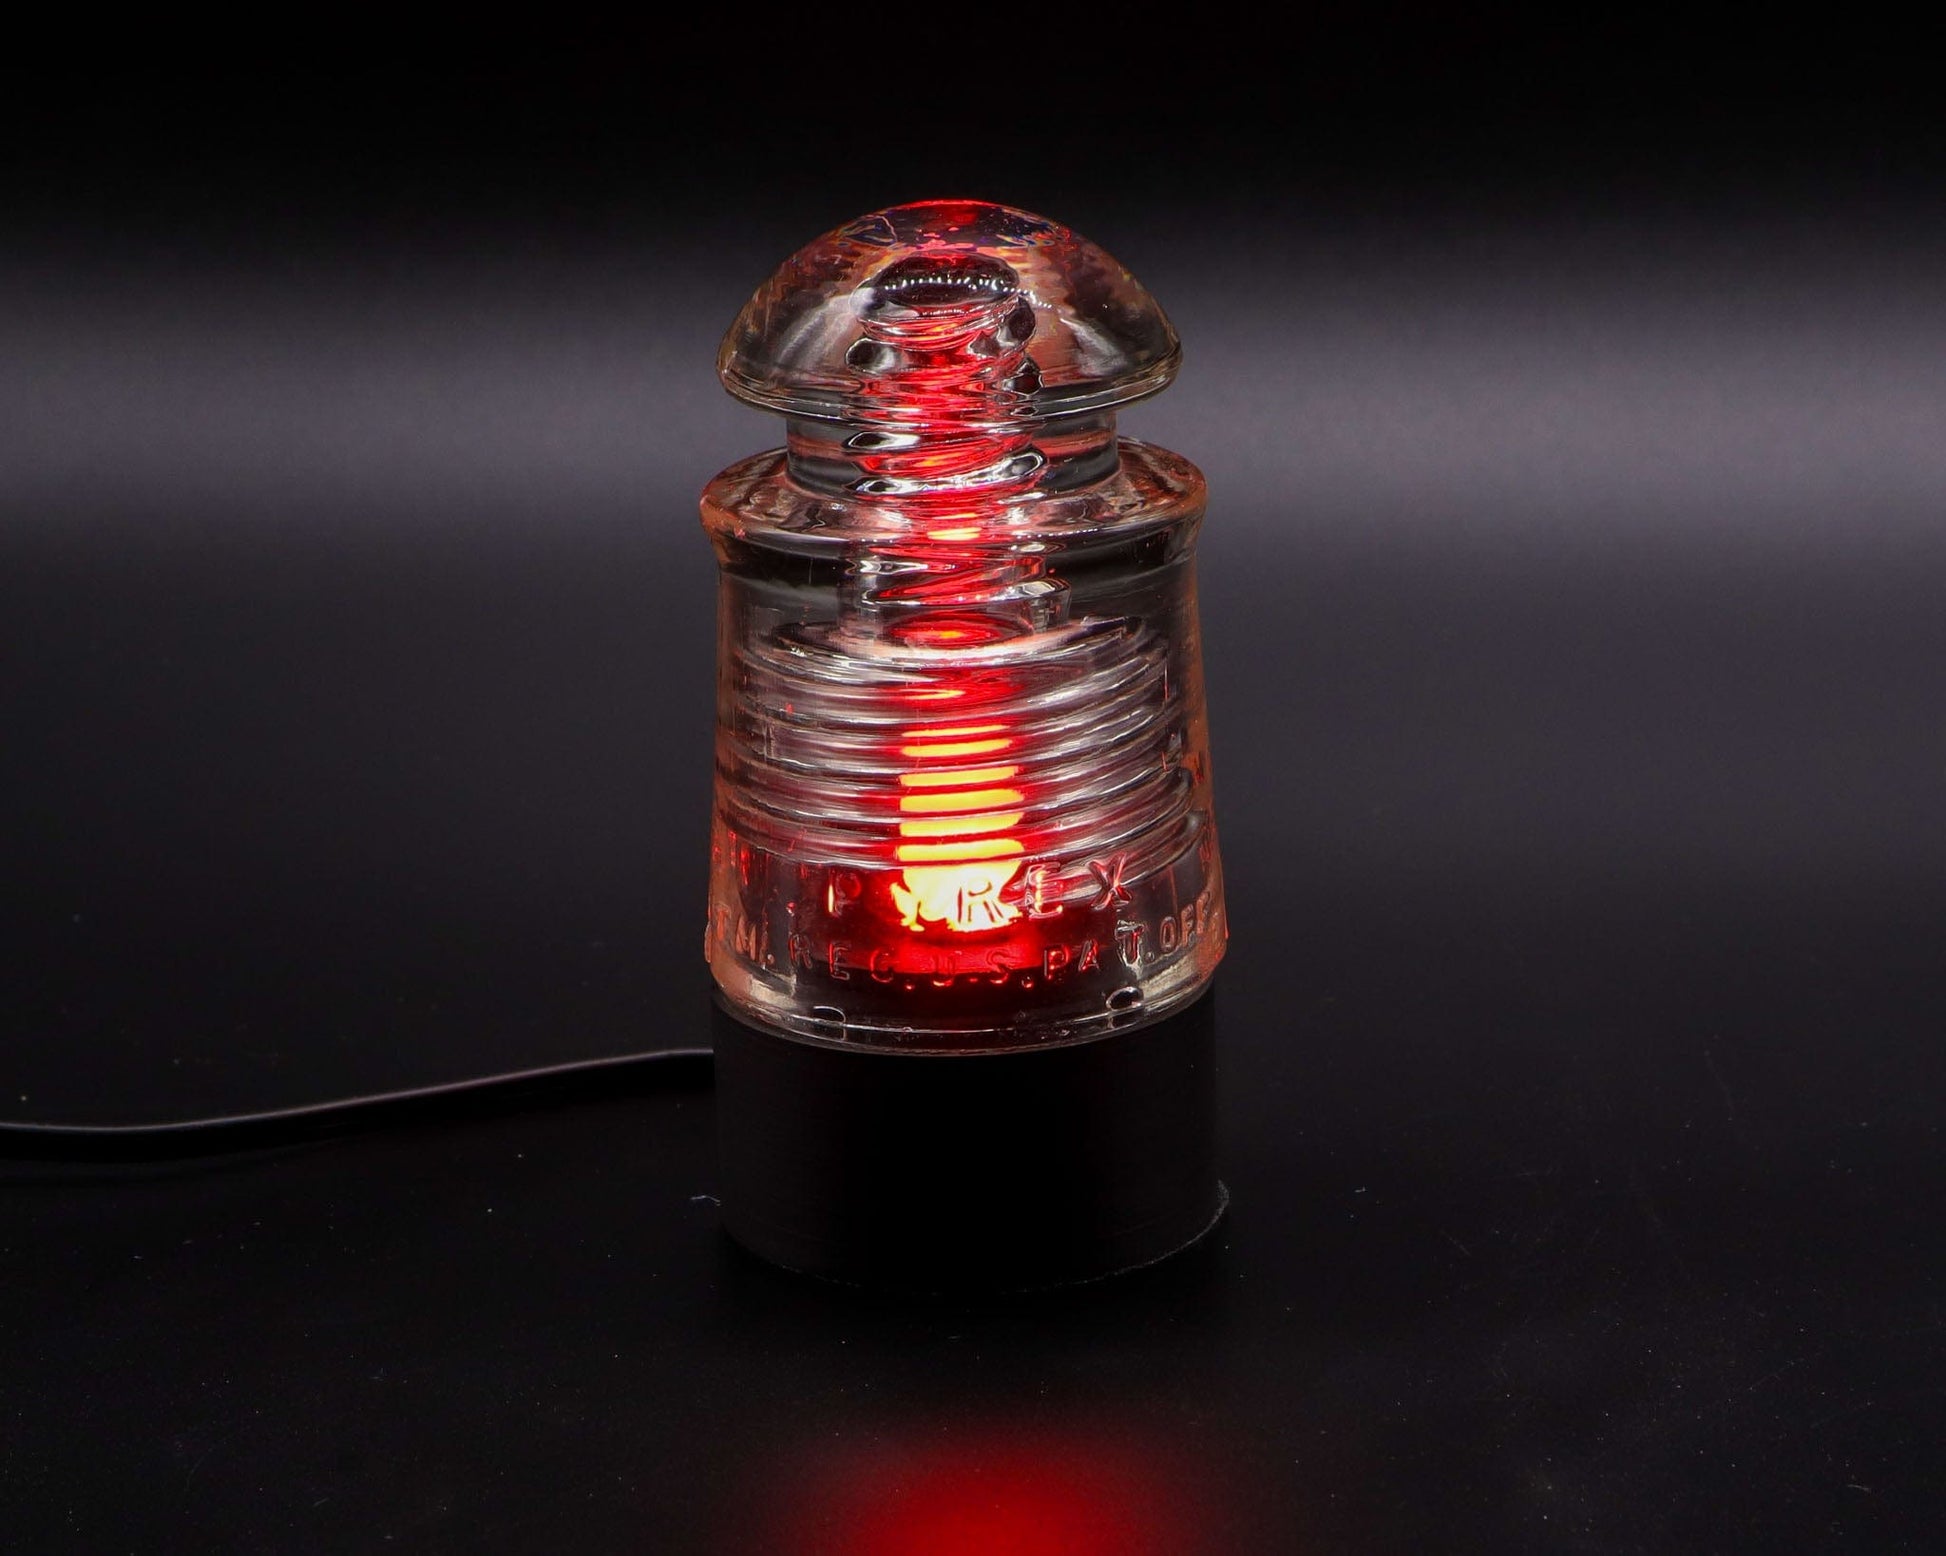 LightAndTimeArt Industrial lamp Lamp Base for "PYREX C17" Glass Insulators, Industrial Lighting, Man Cave Decor